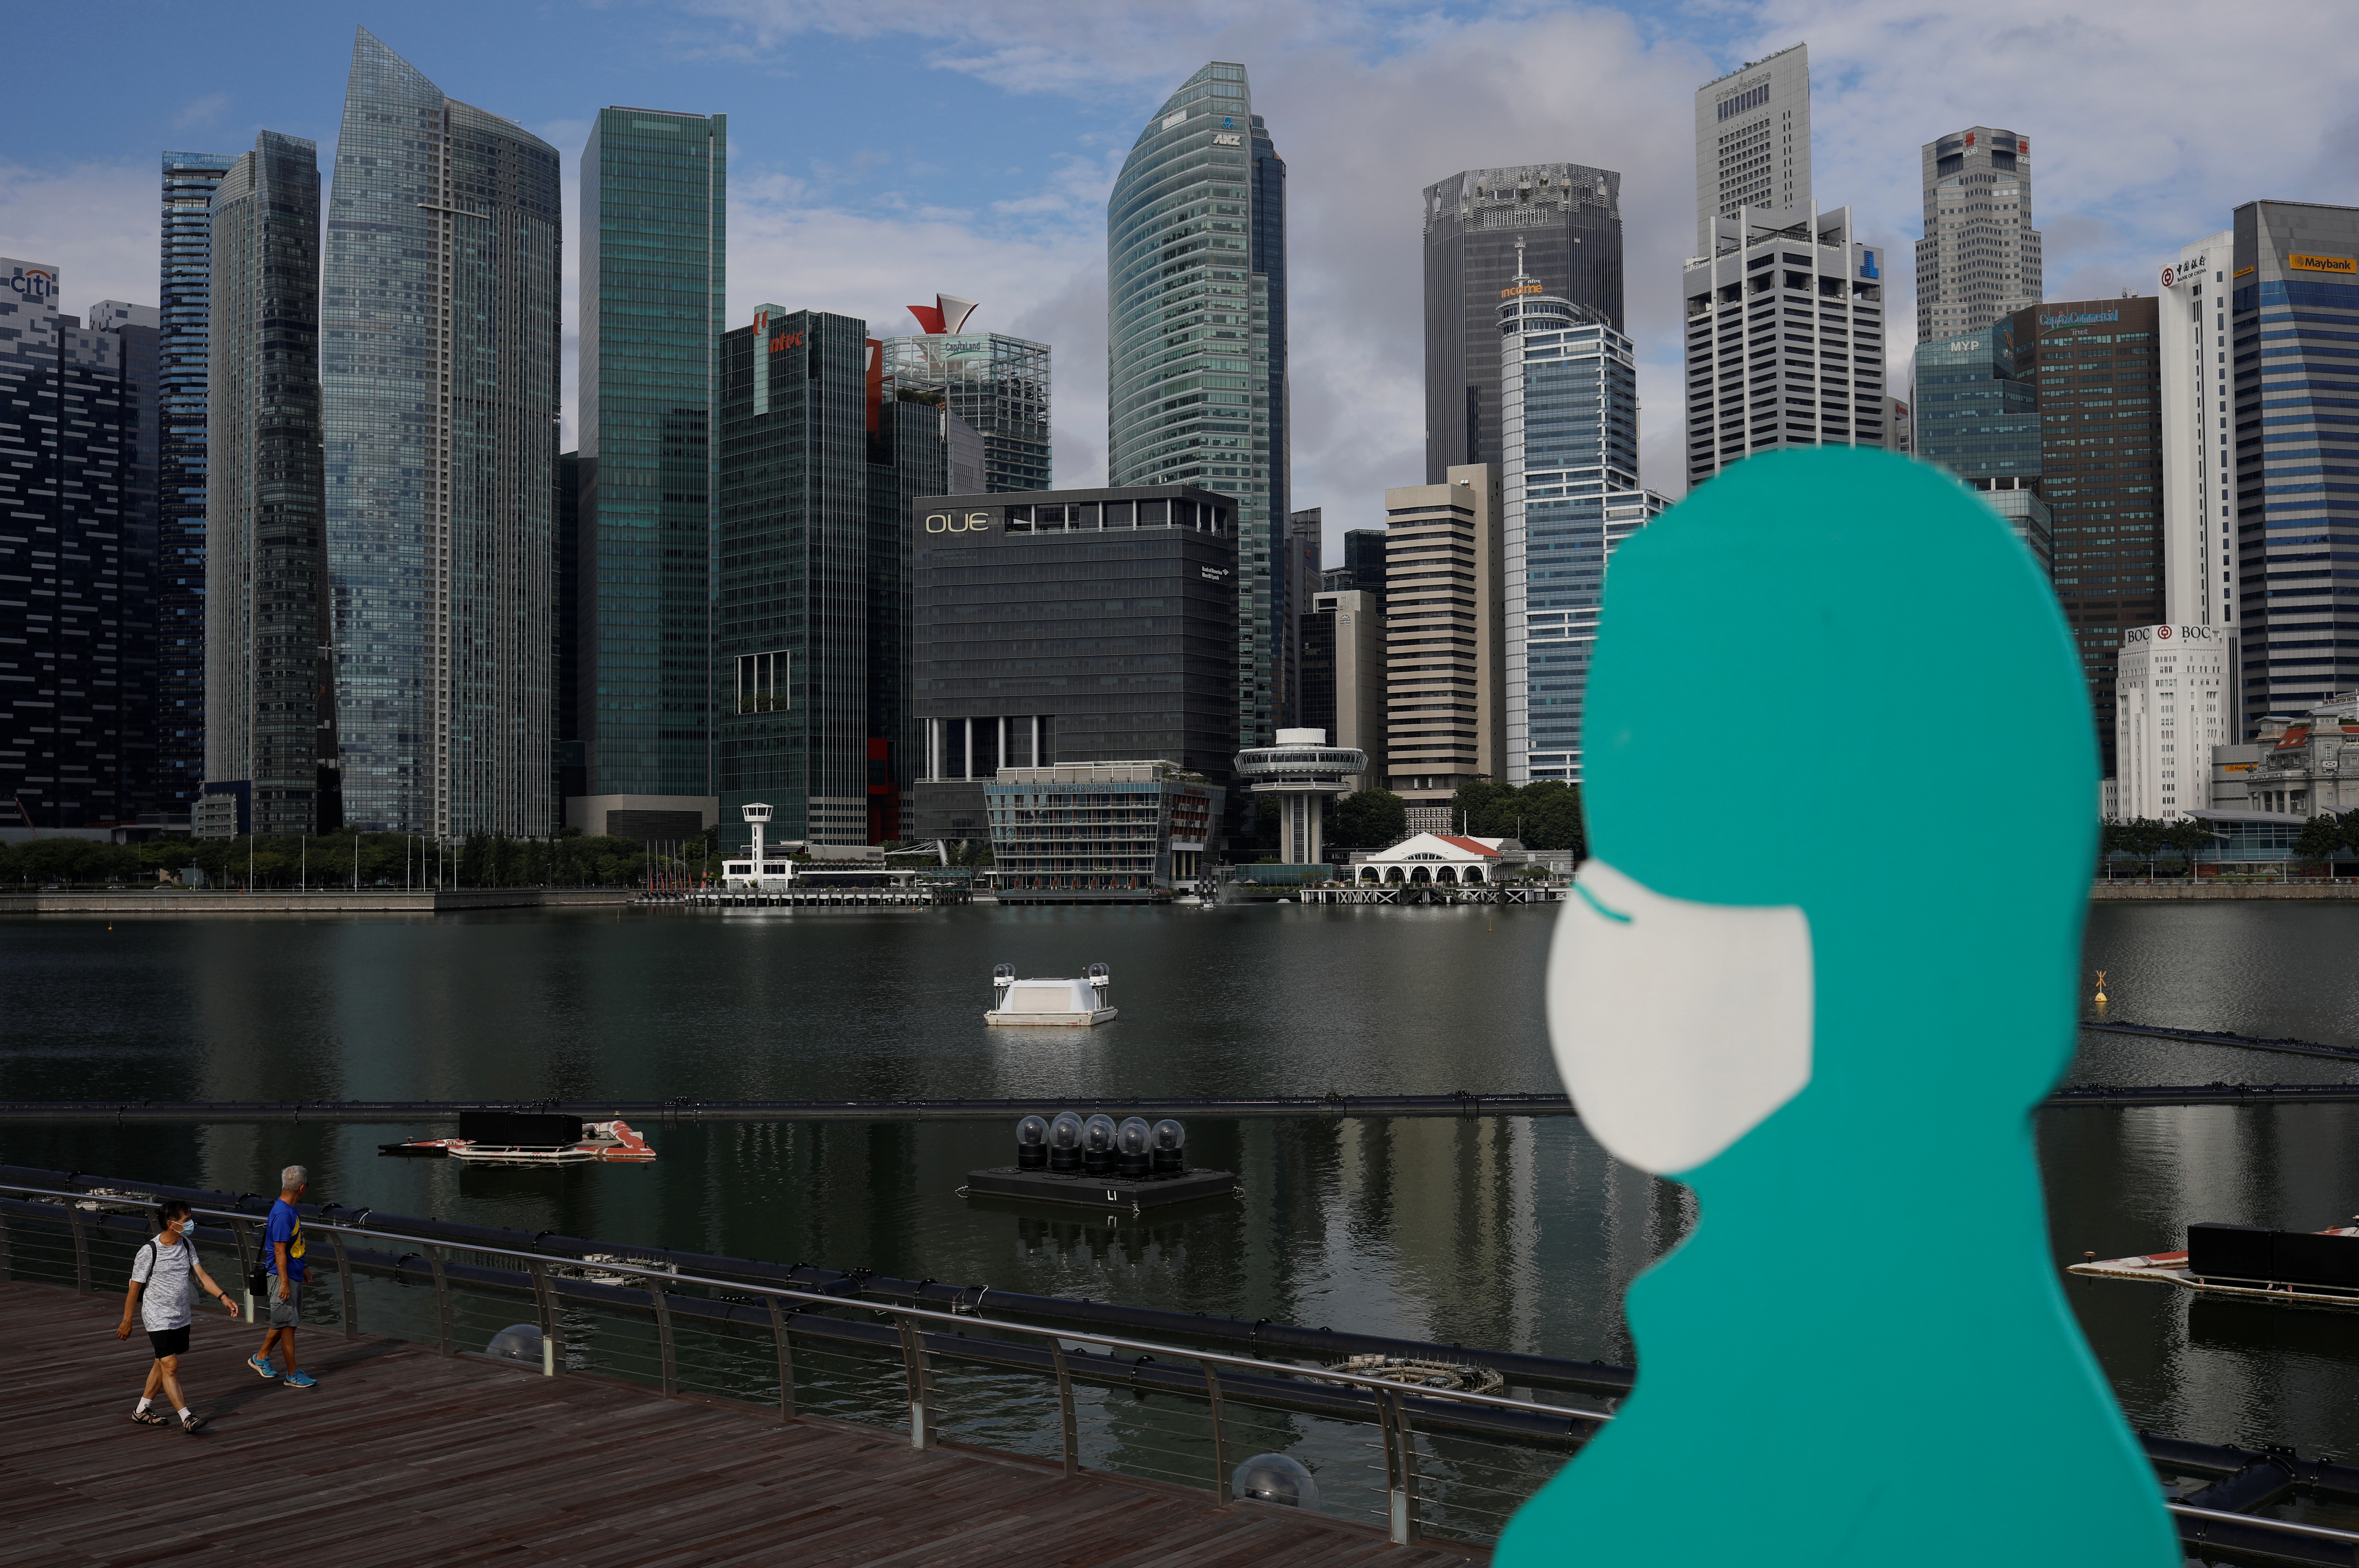 Need singapore wear 2022 to no mask Singapore's workplace